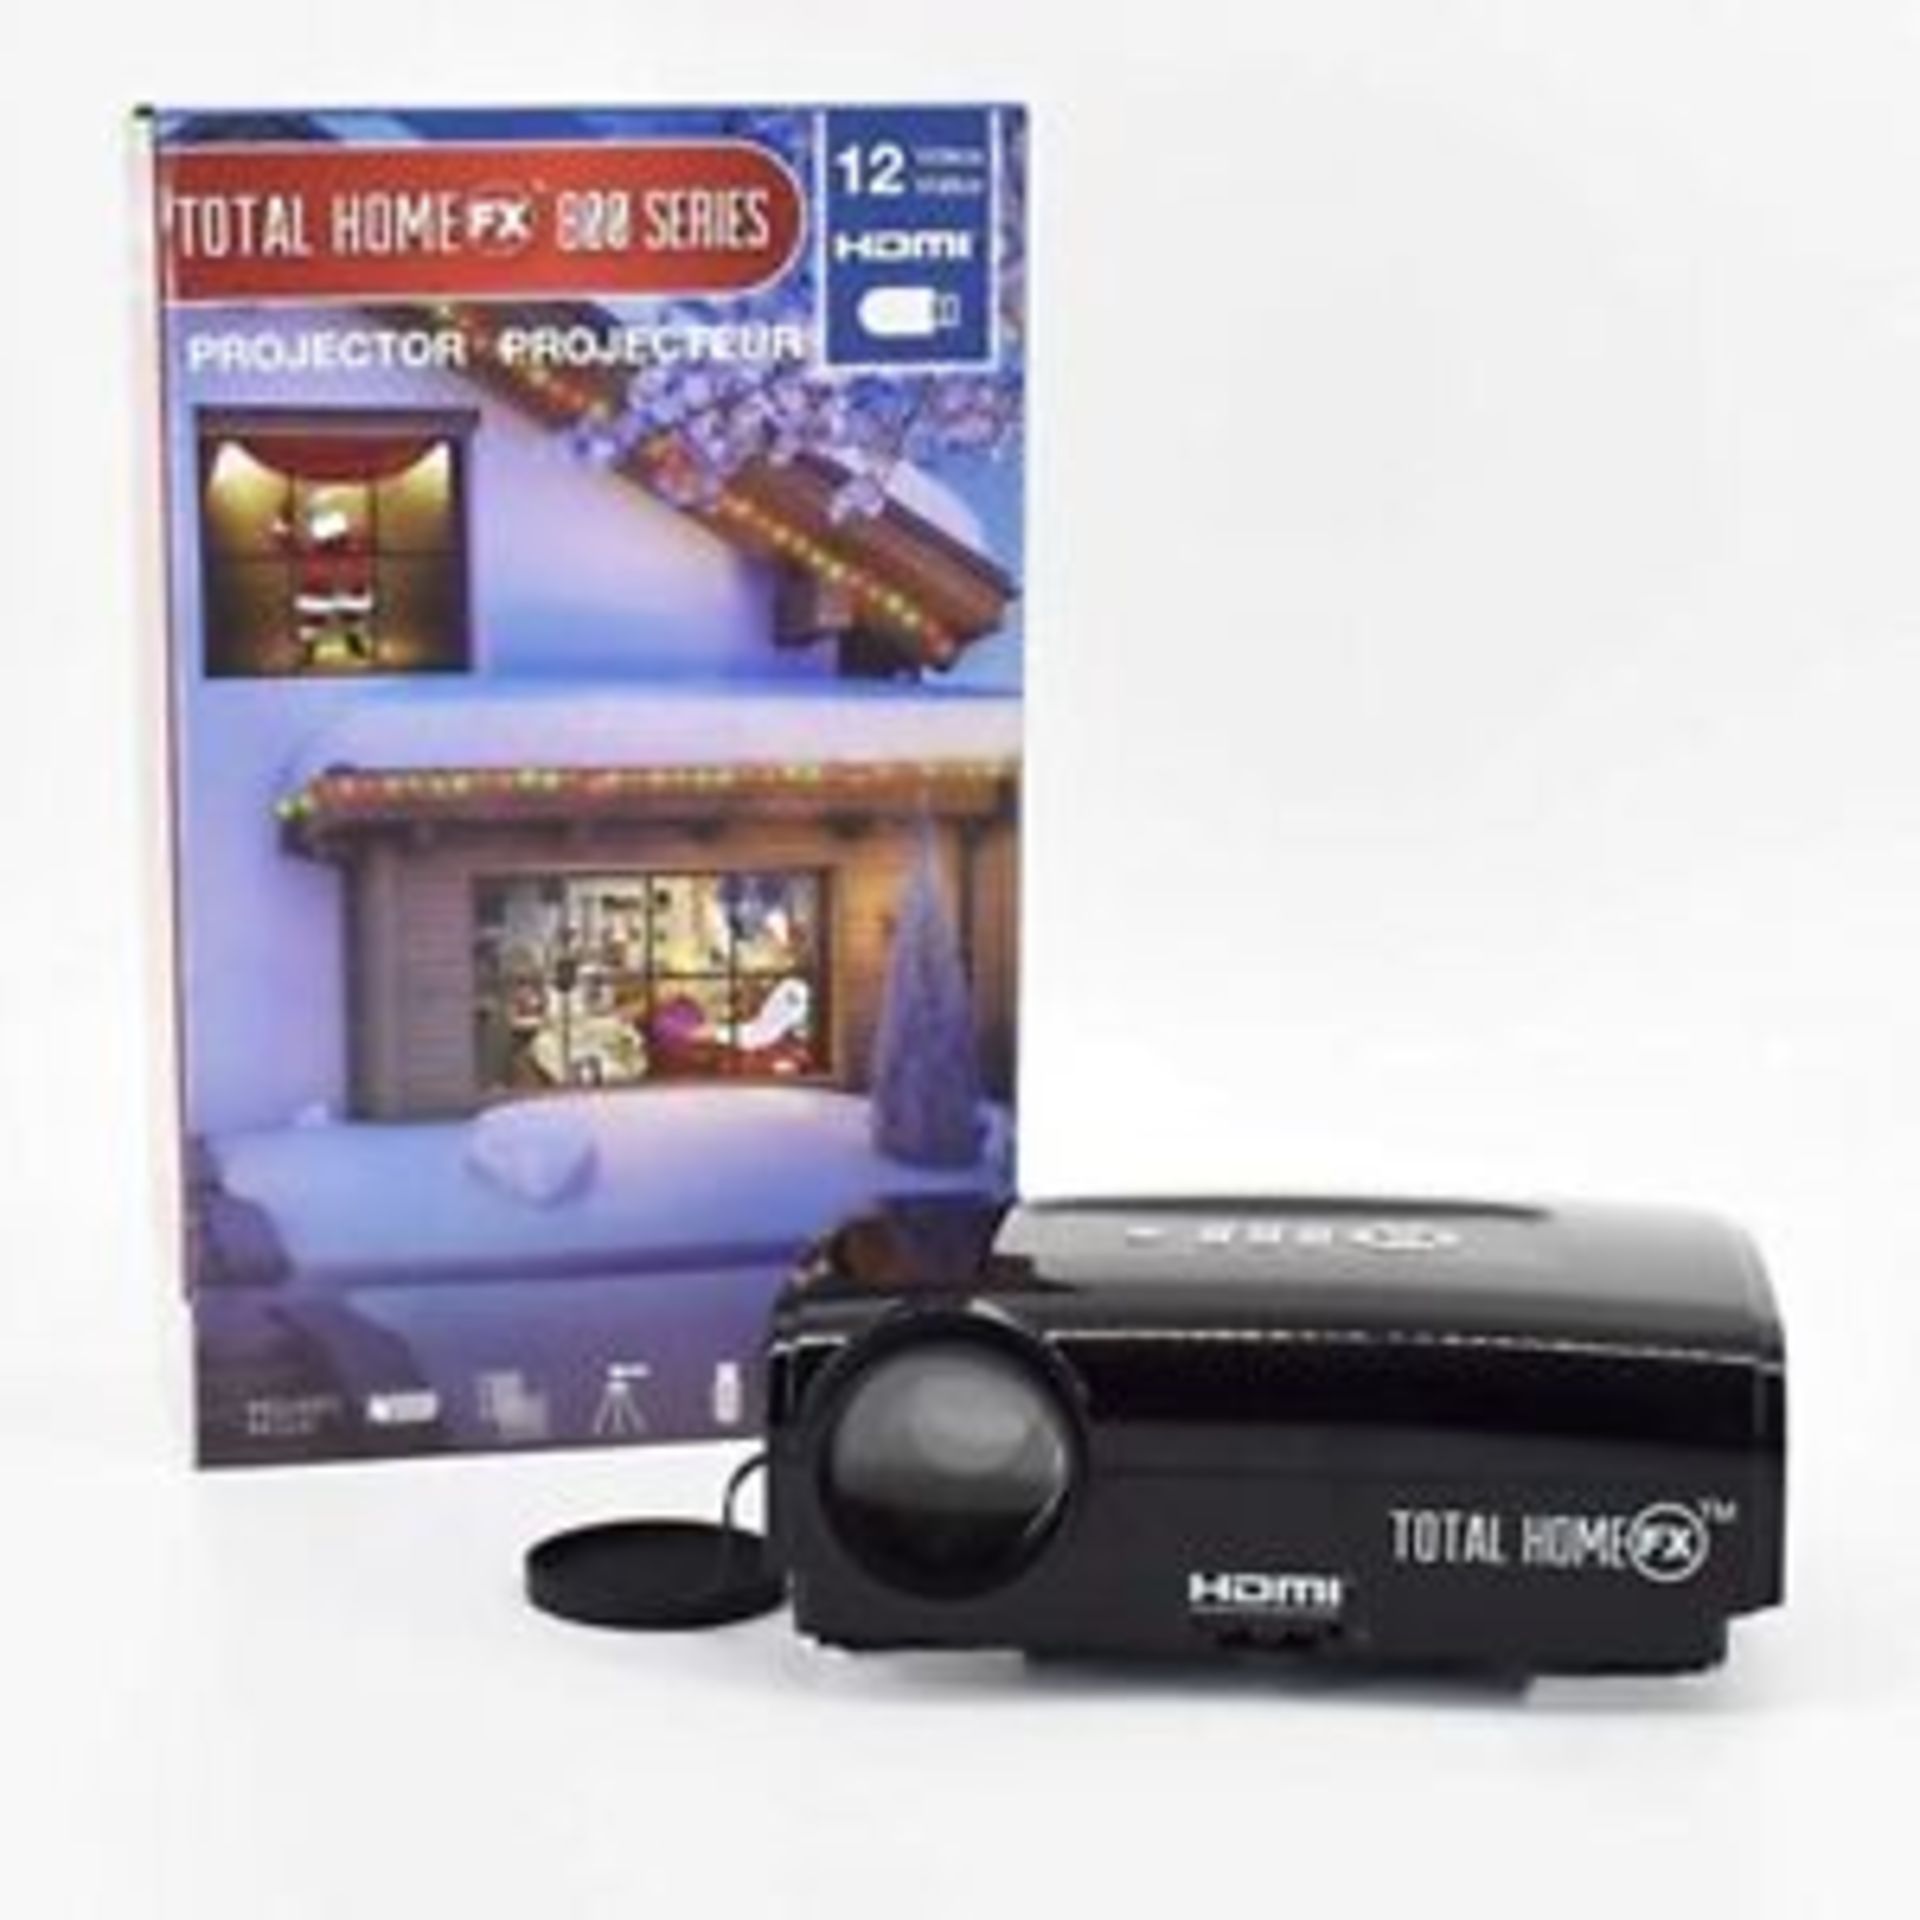 Total Home FX USB HDMI Projector 800 Series Halloween Christmas Window Display - Image 7 of 12